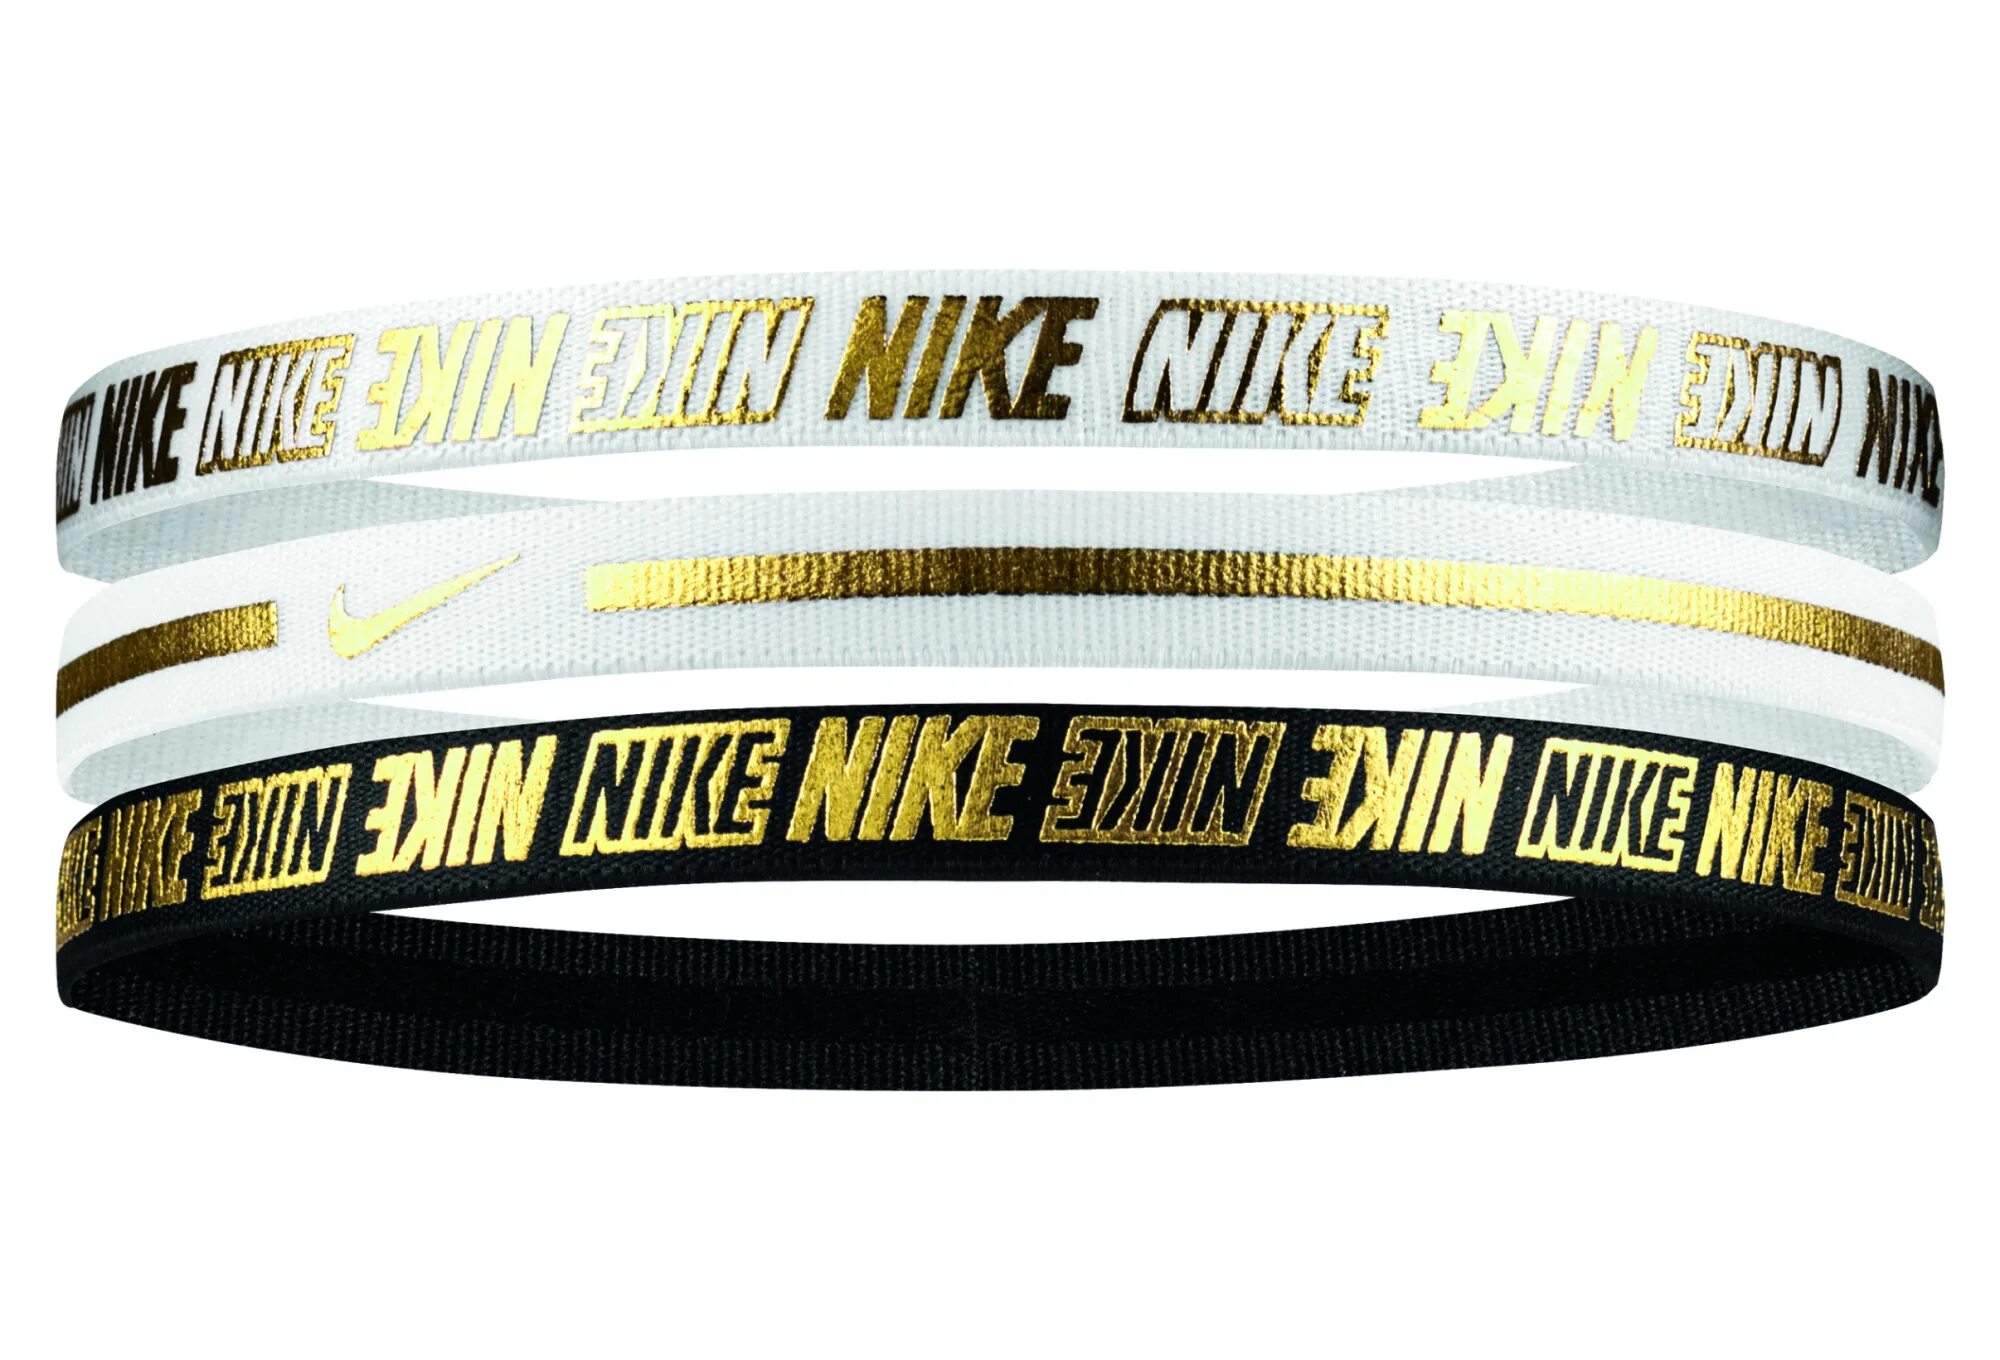 Резинка на голову Nike Metallic Hairbands. Nike Headbands 3pack черная. Nike Hairbands 3 Pack. Повязка на голову Nike Elastic hair Bands. Резинка найк